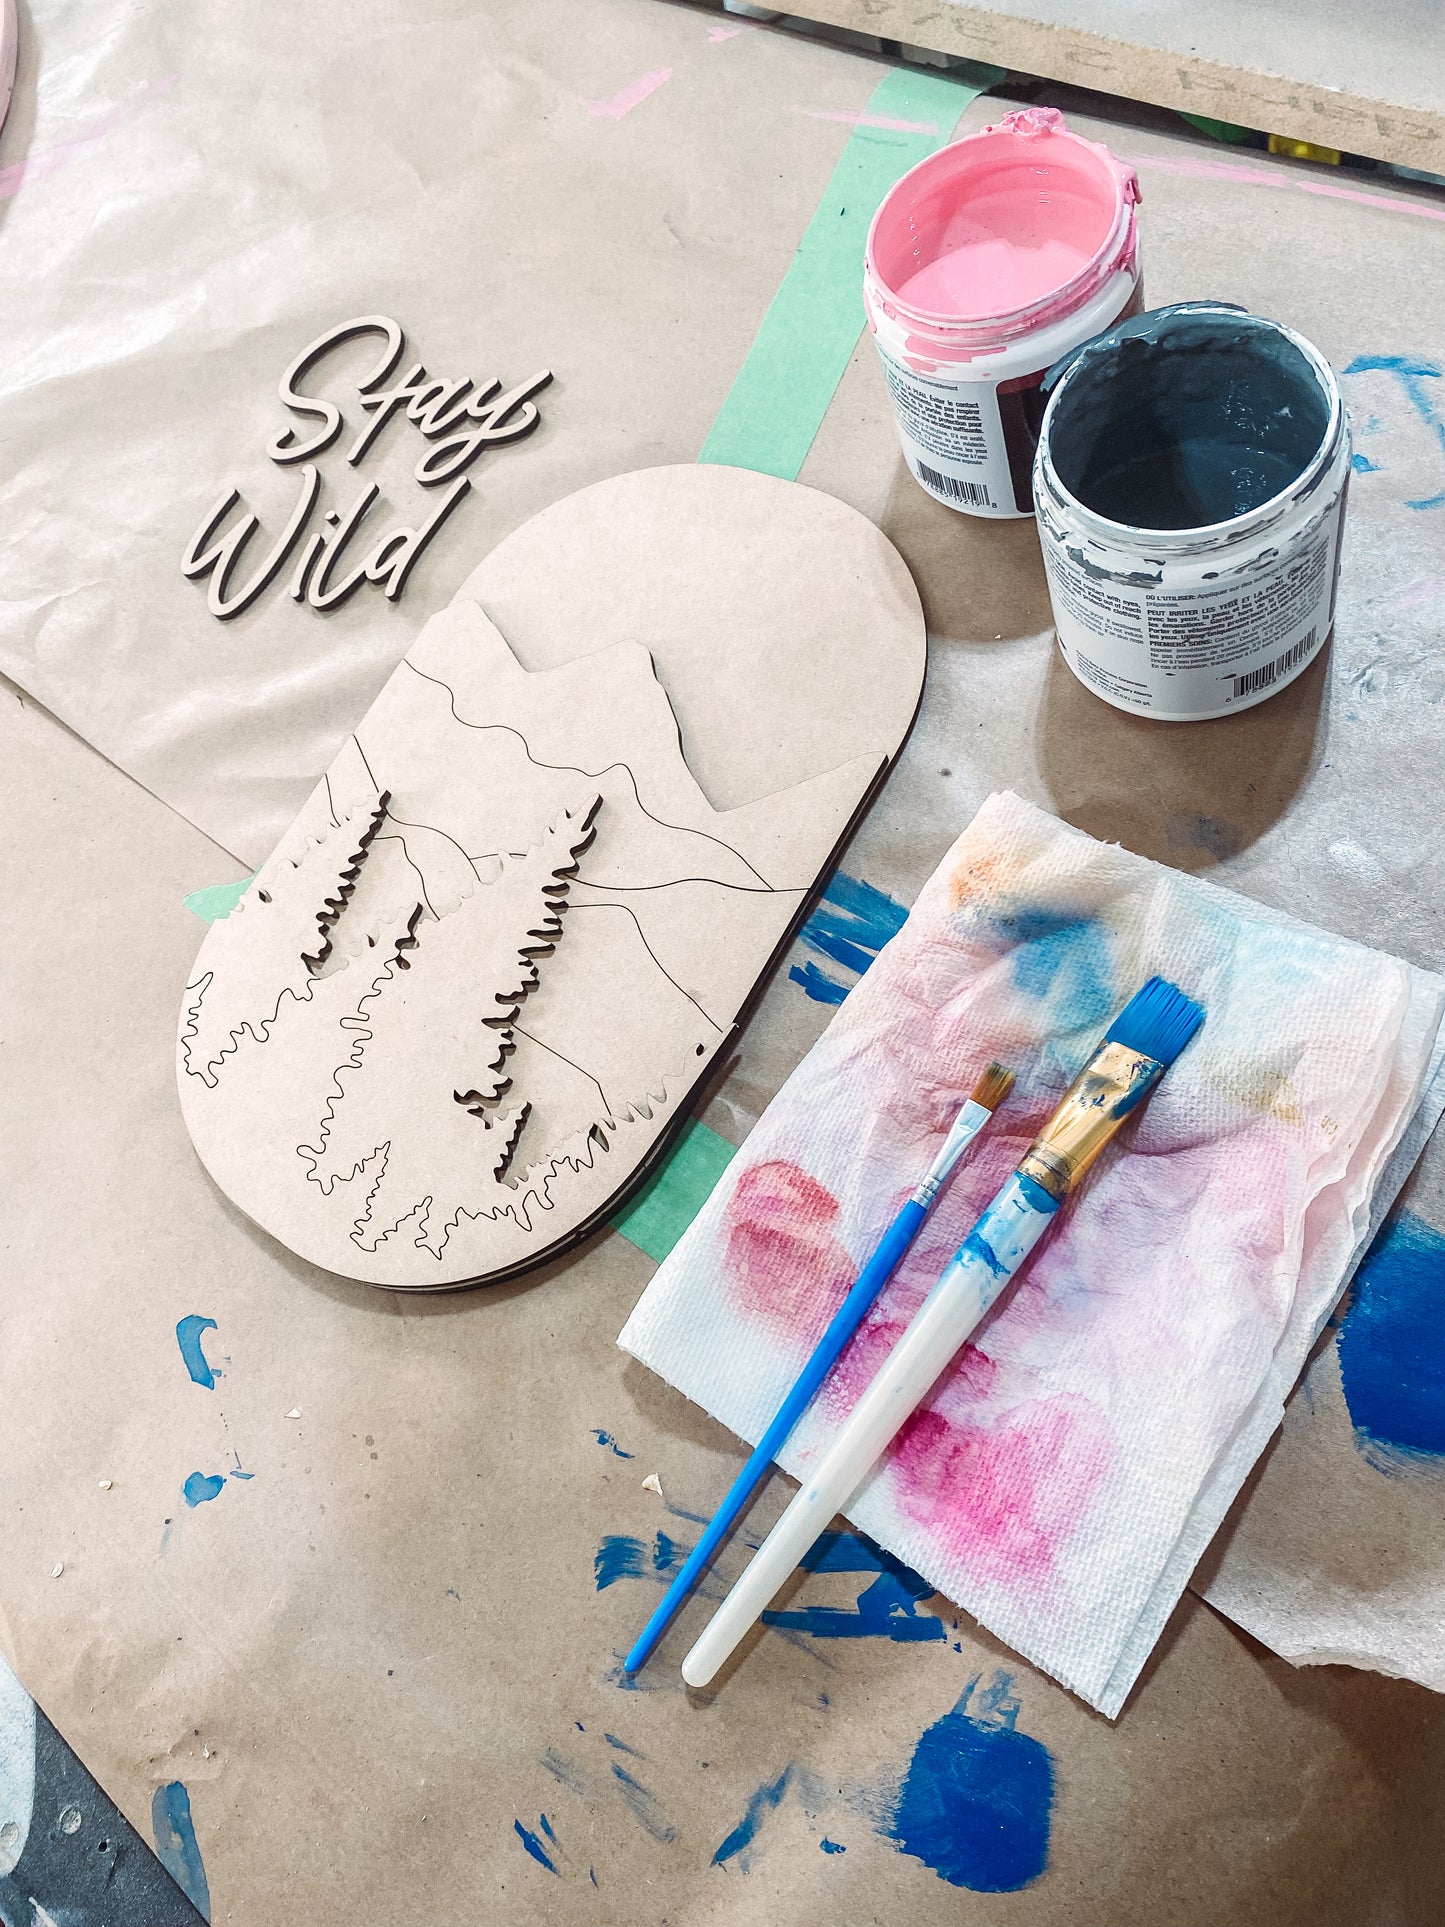 Stay Wild DIY Paint kit